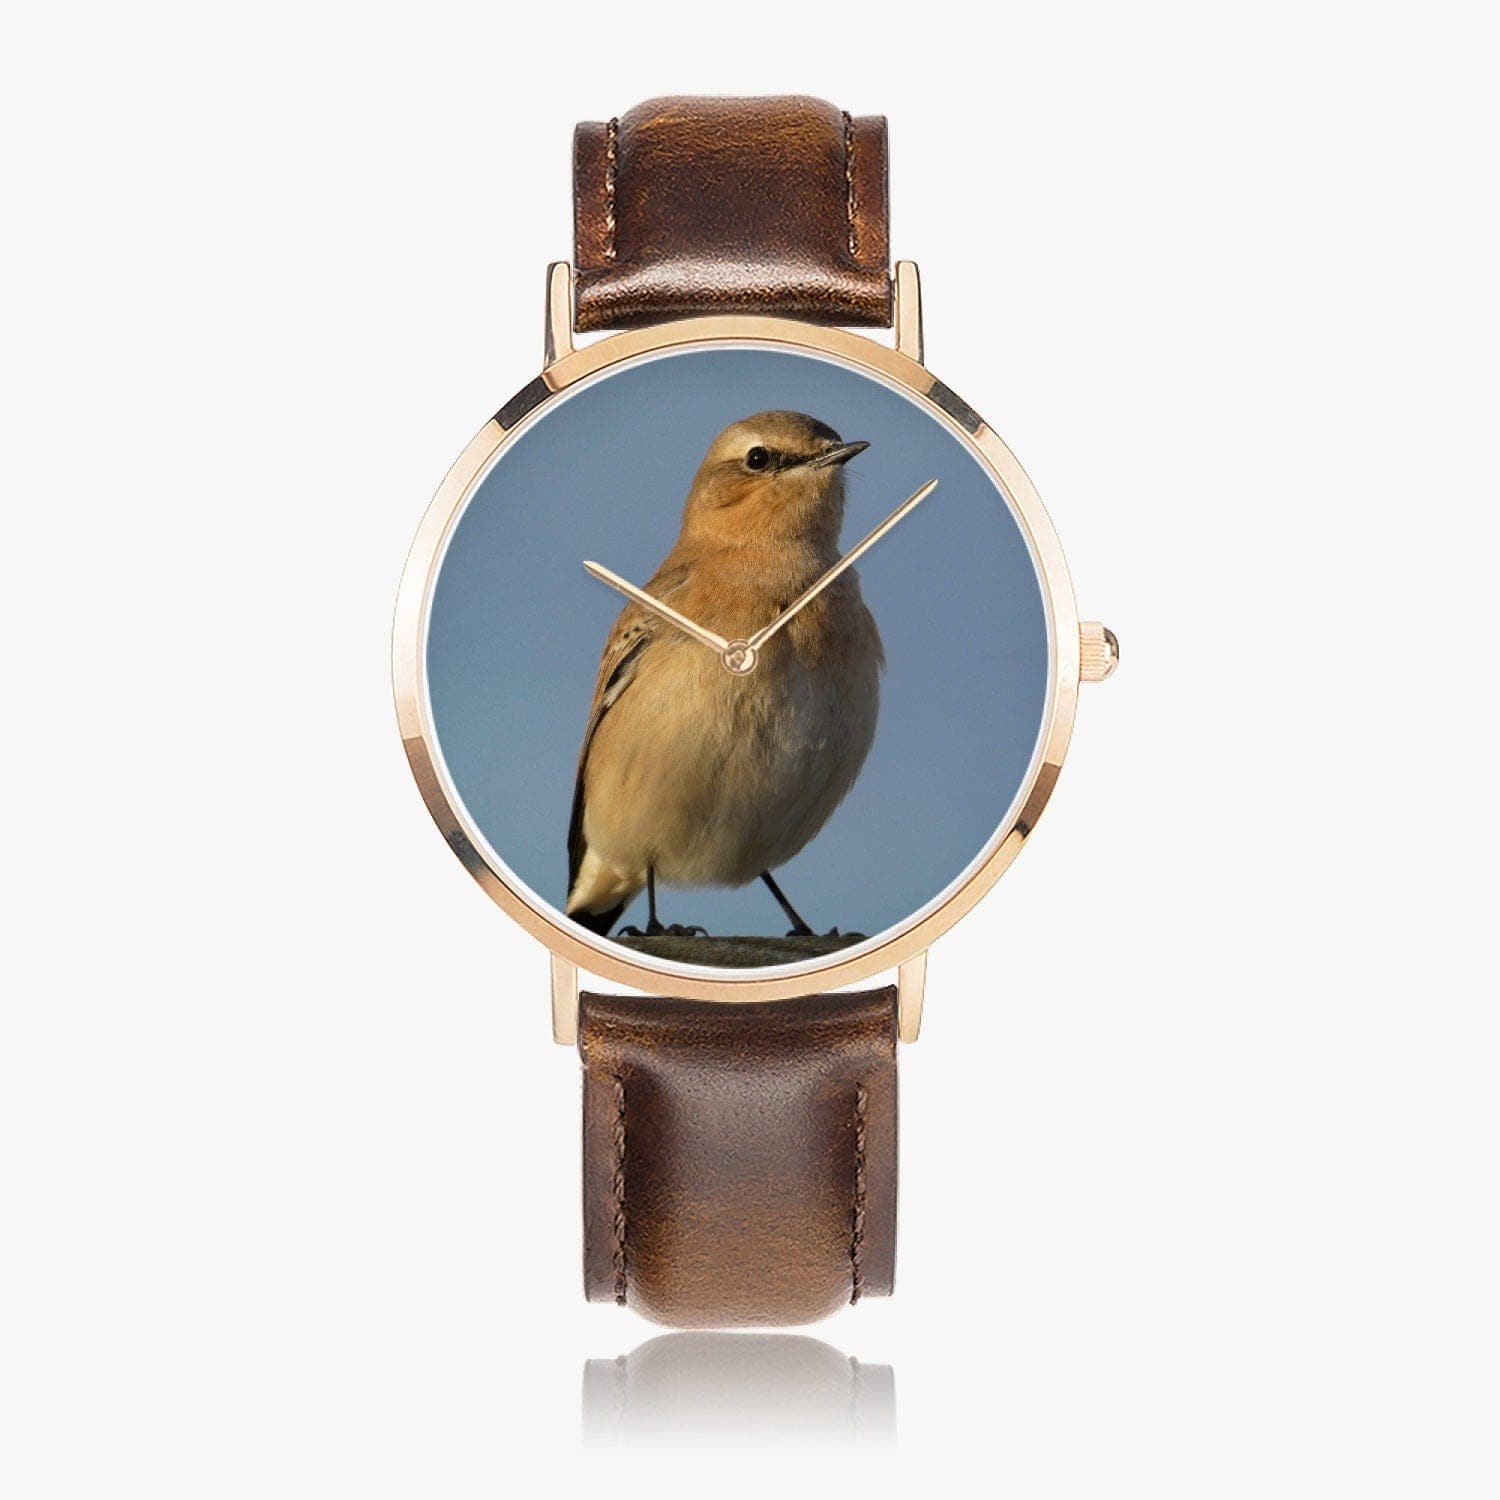 Golden bird. Hot Selling Ultra-Thin Leather Strap Quartz Watch (Rose Gold), designed by Sensus Studio Design